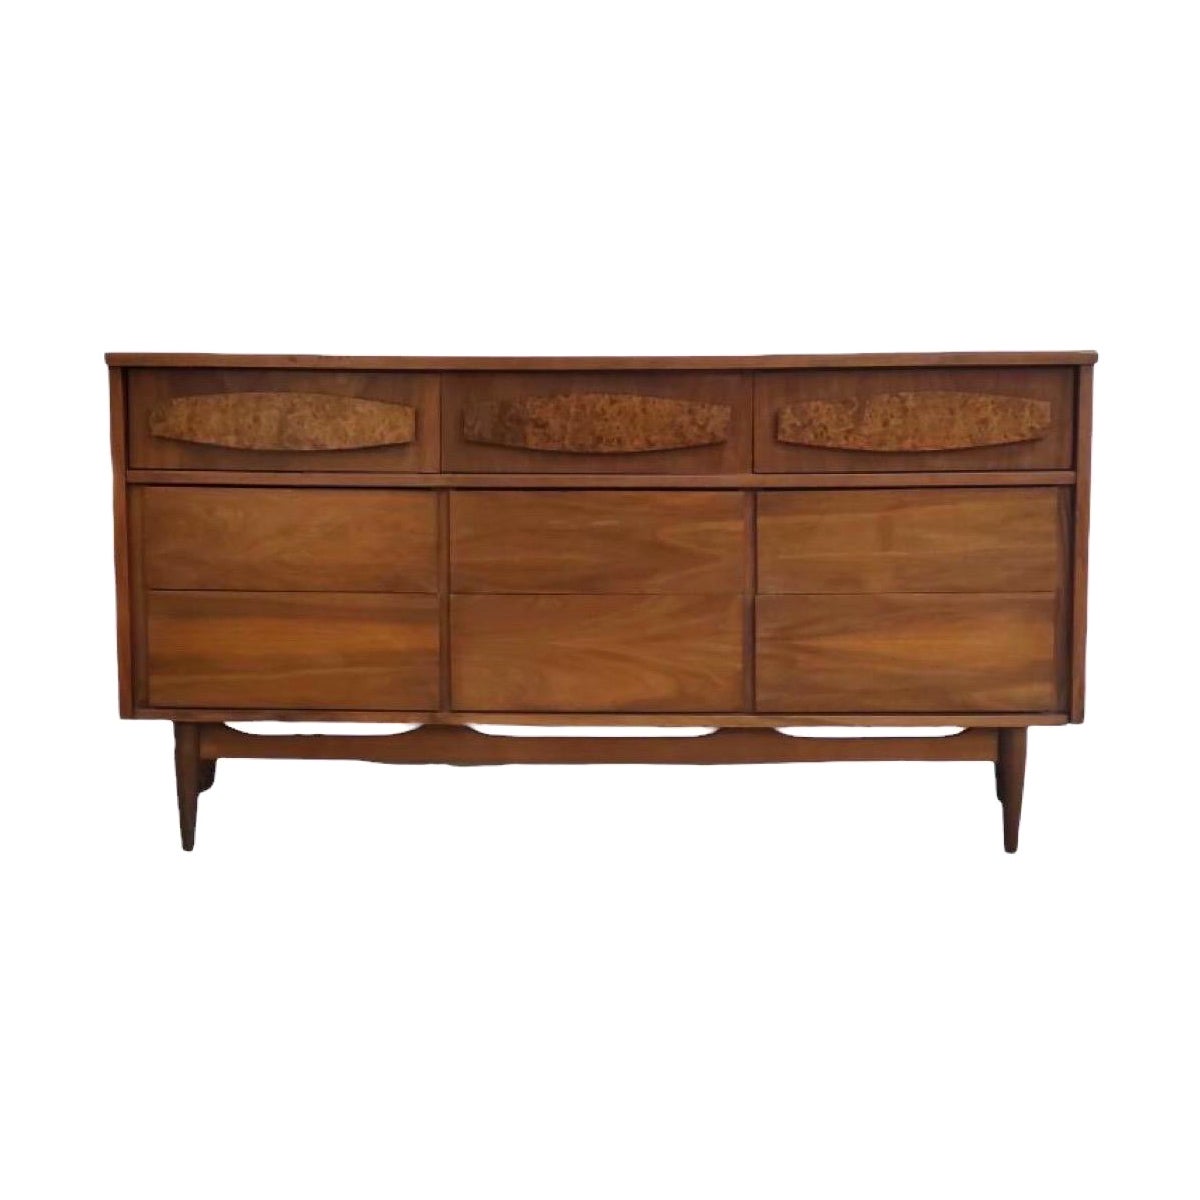 Vintage Mid Century Modern Dresser with Burl-wood Accents